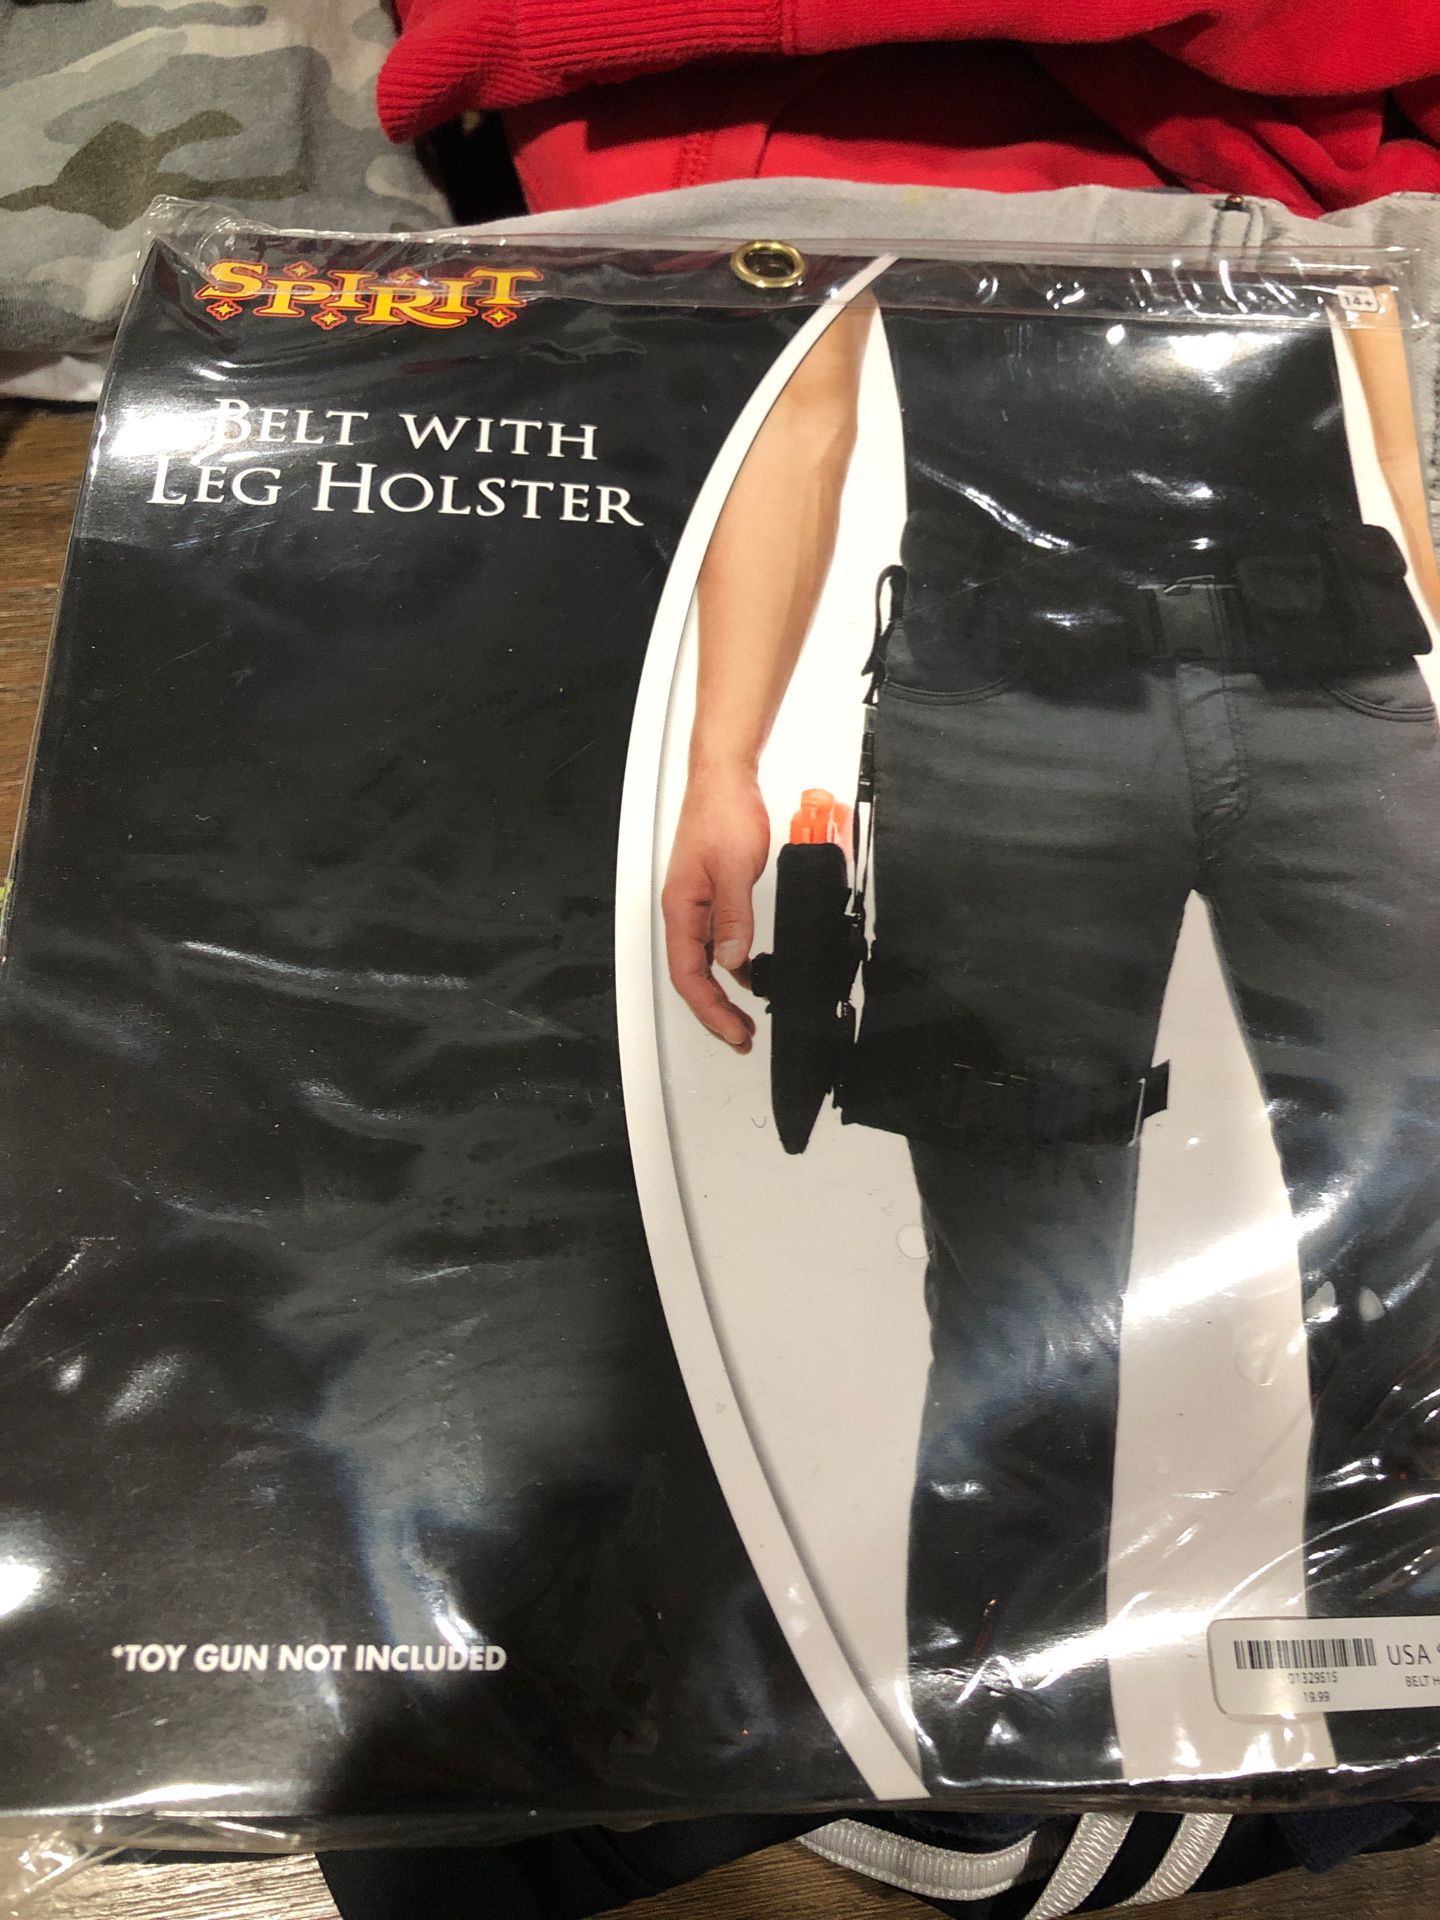 Belt with leg holster